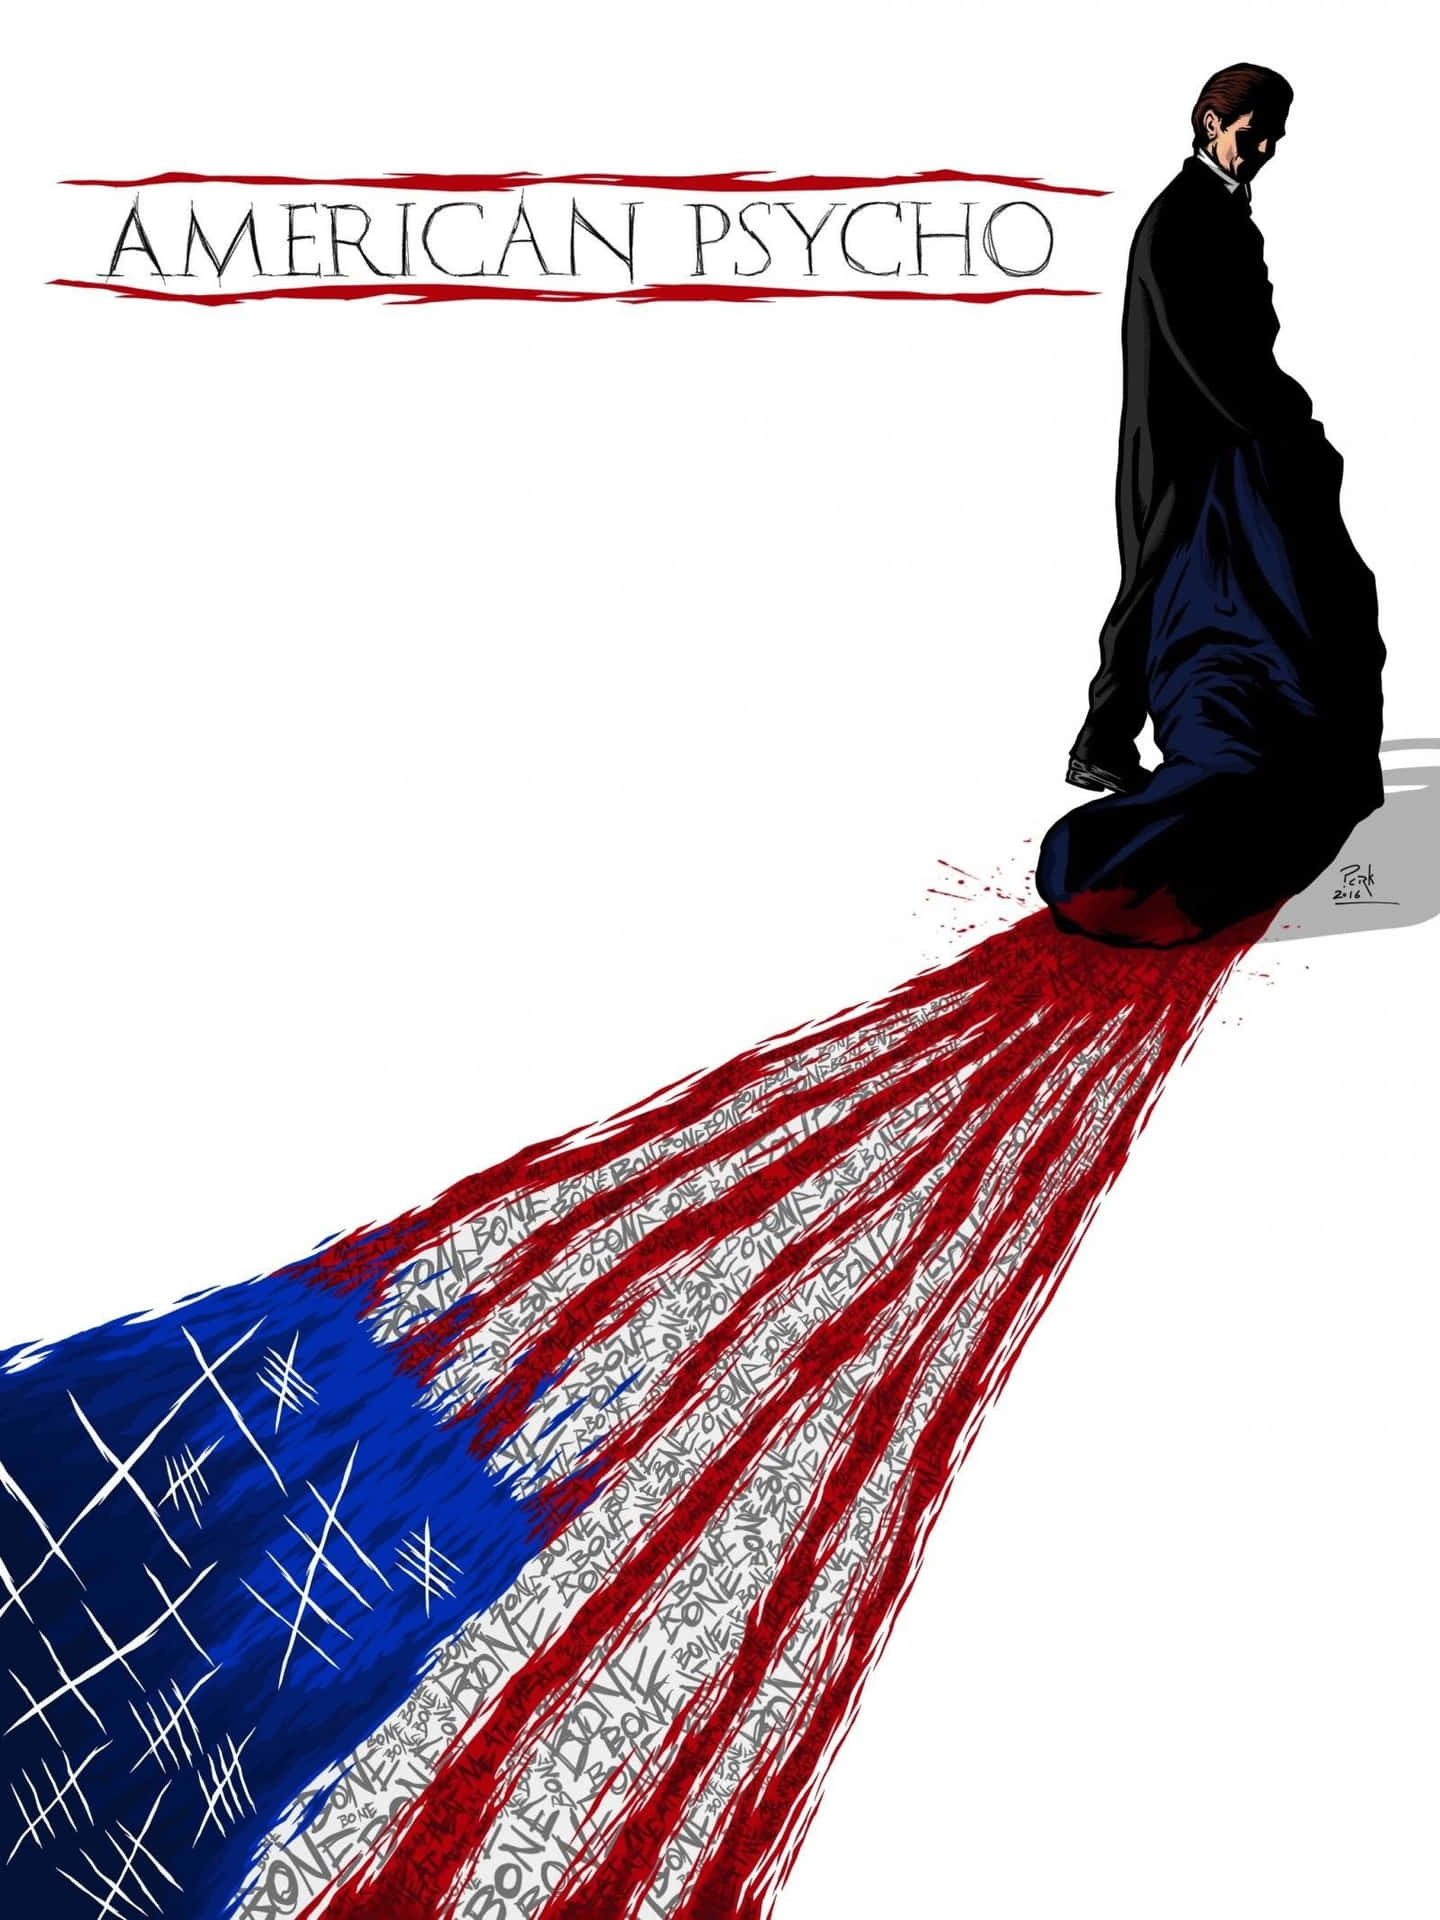 Amerikanskapsyko Flaggan Hd Wallpaper